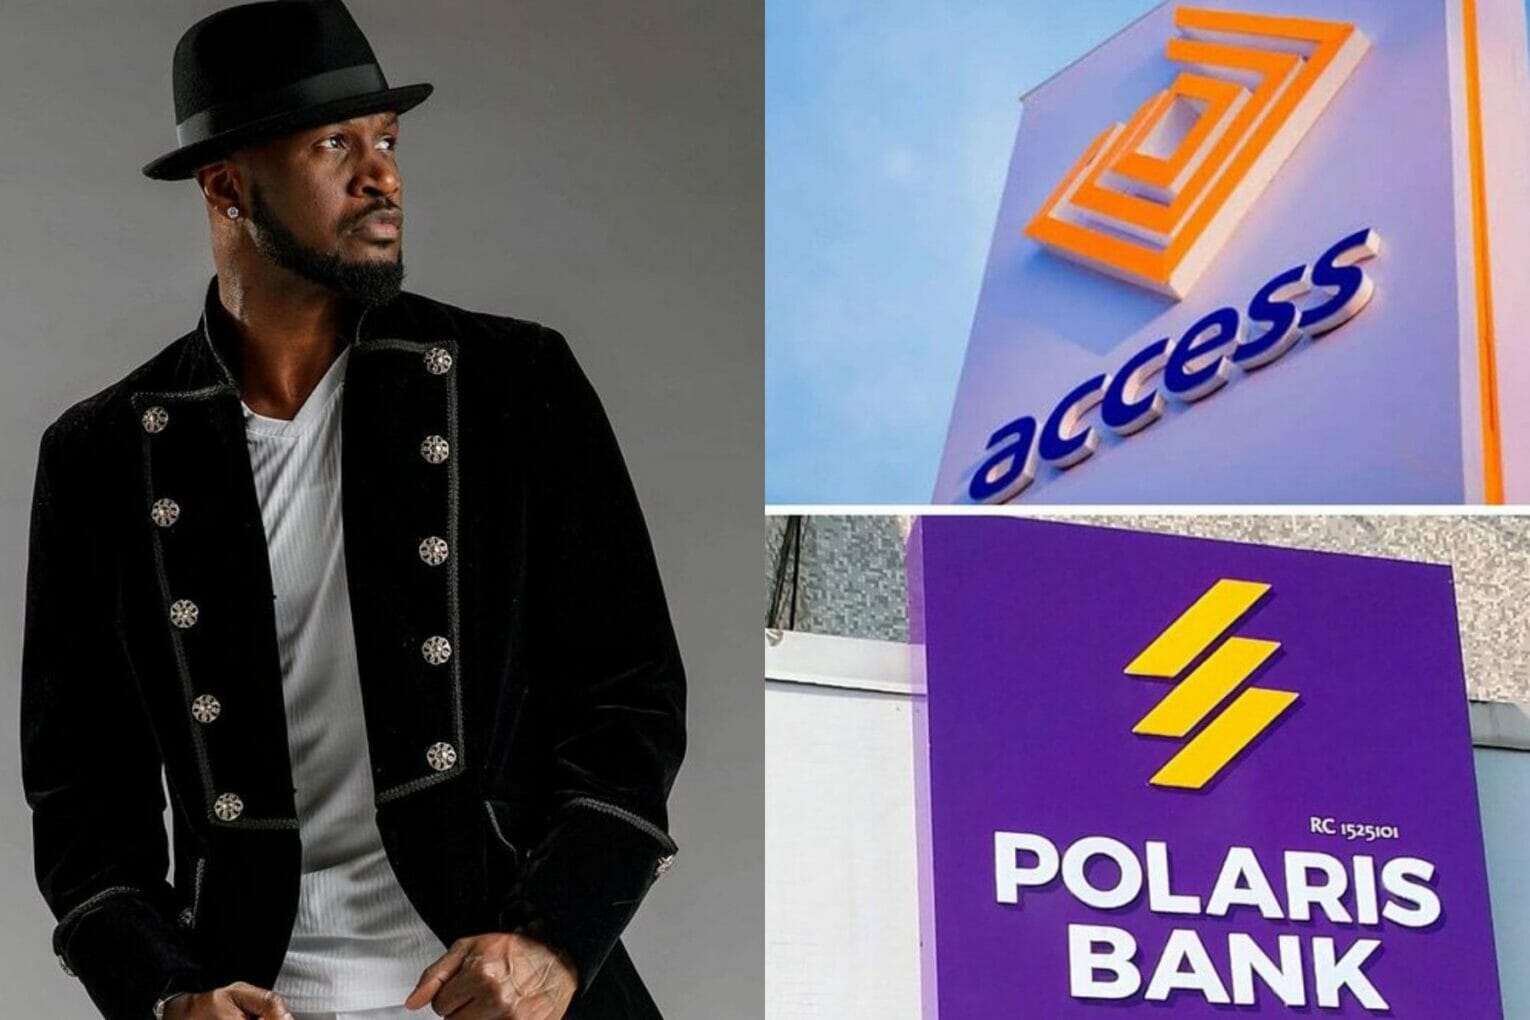 Peter Okoye calls out Polaris and Access Bank